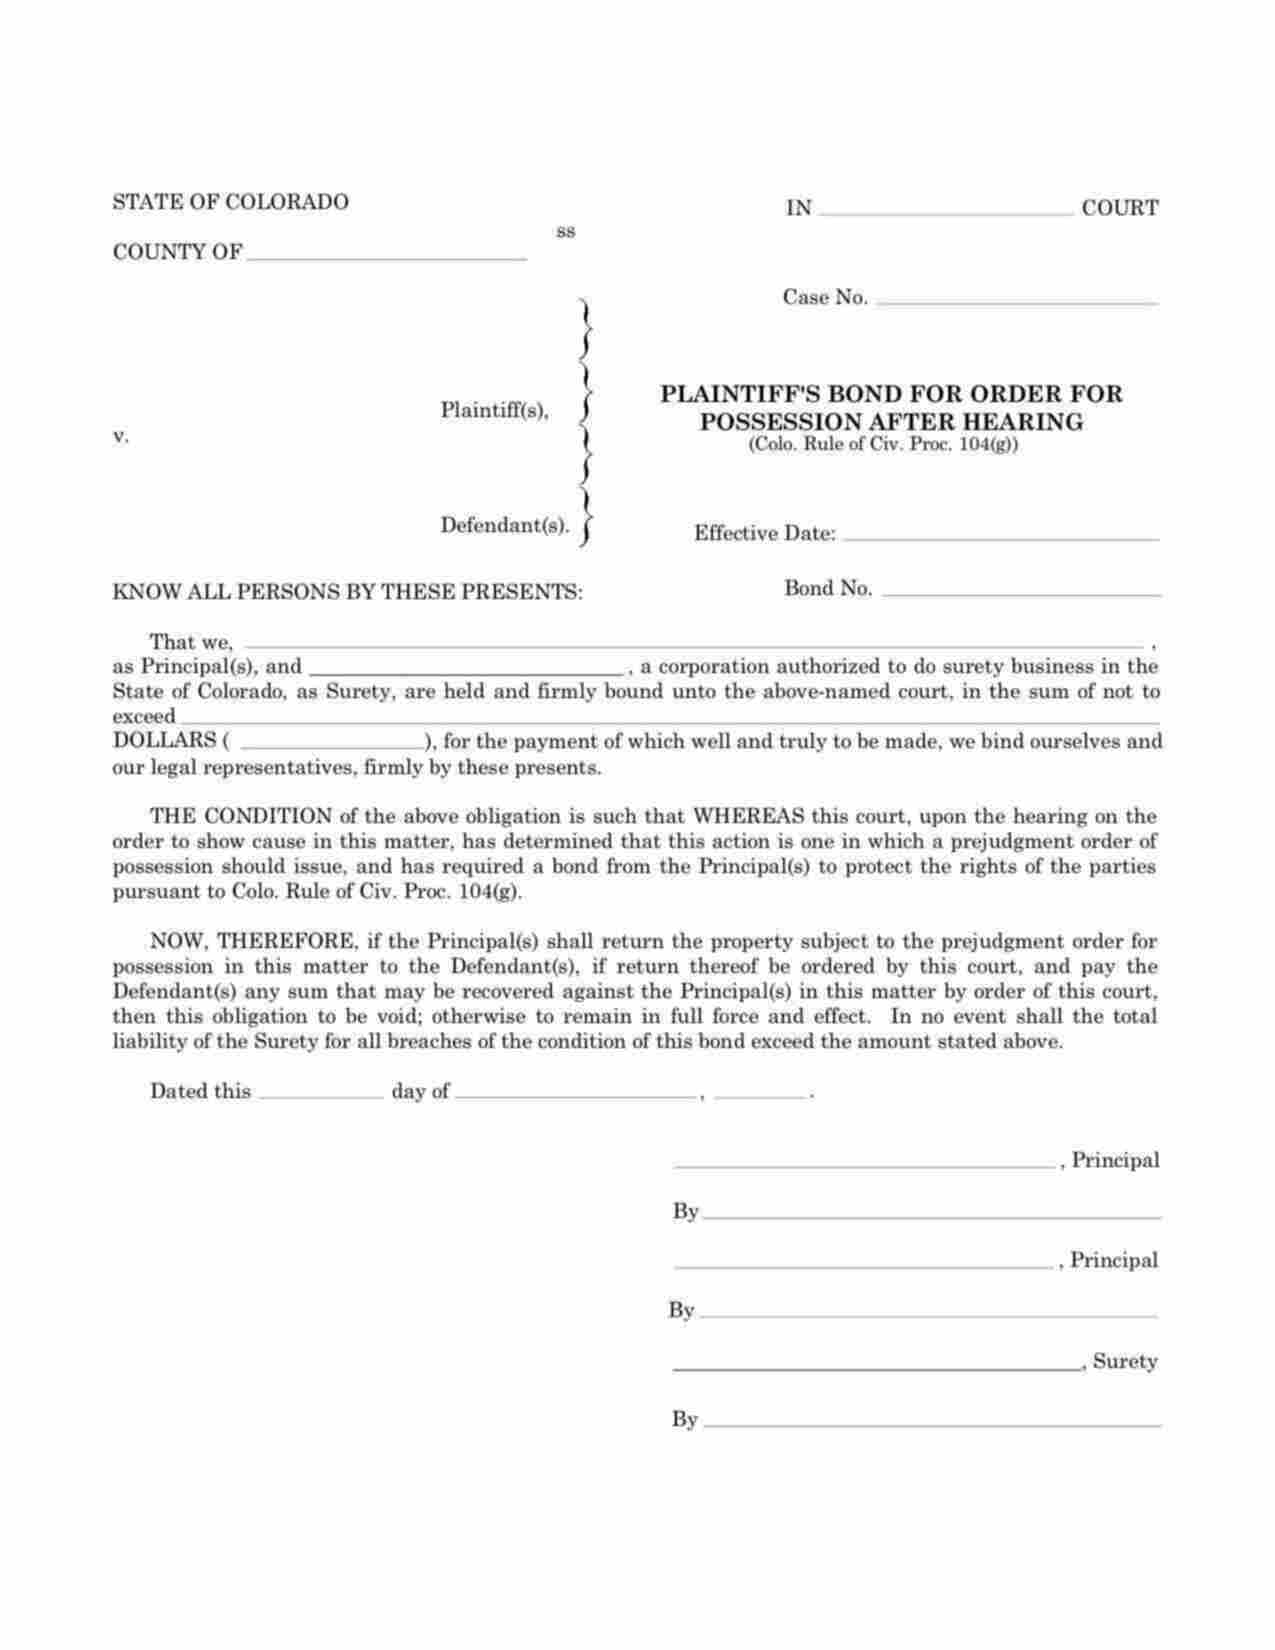 Colorado Plaintiffs Order for Possession After Hearing Bond Form